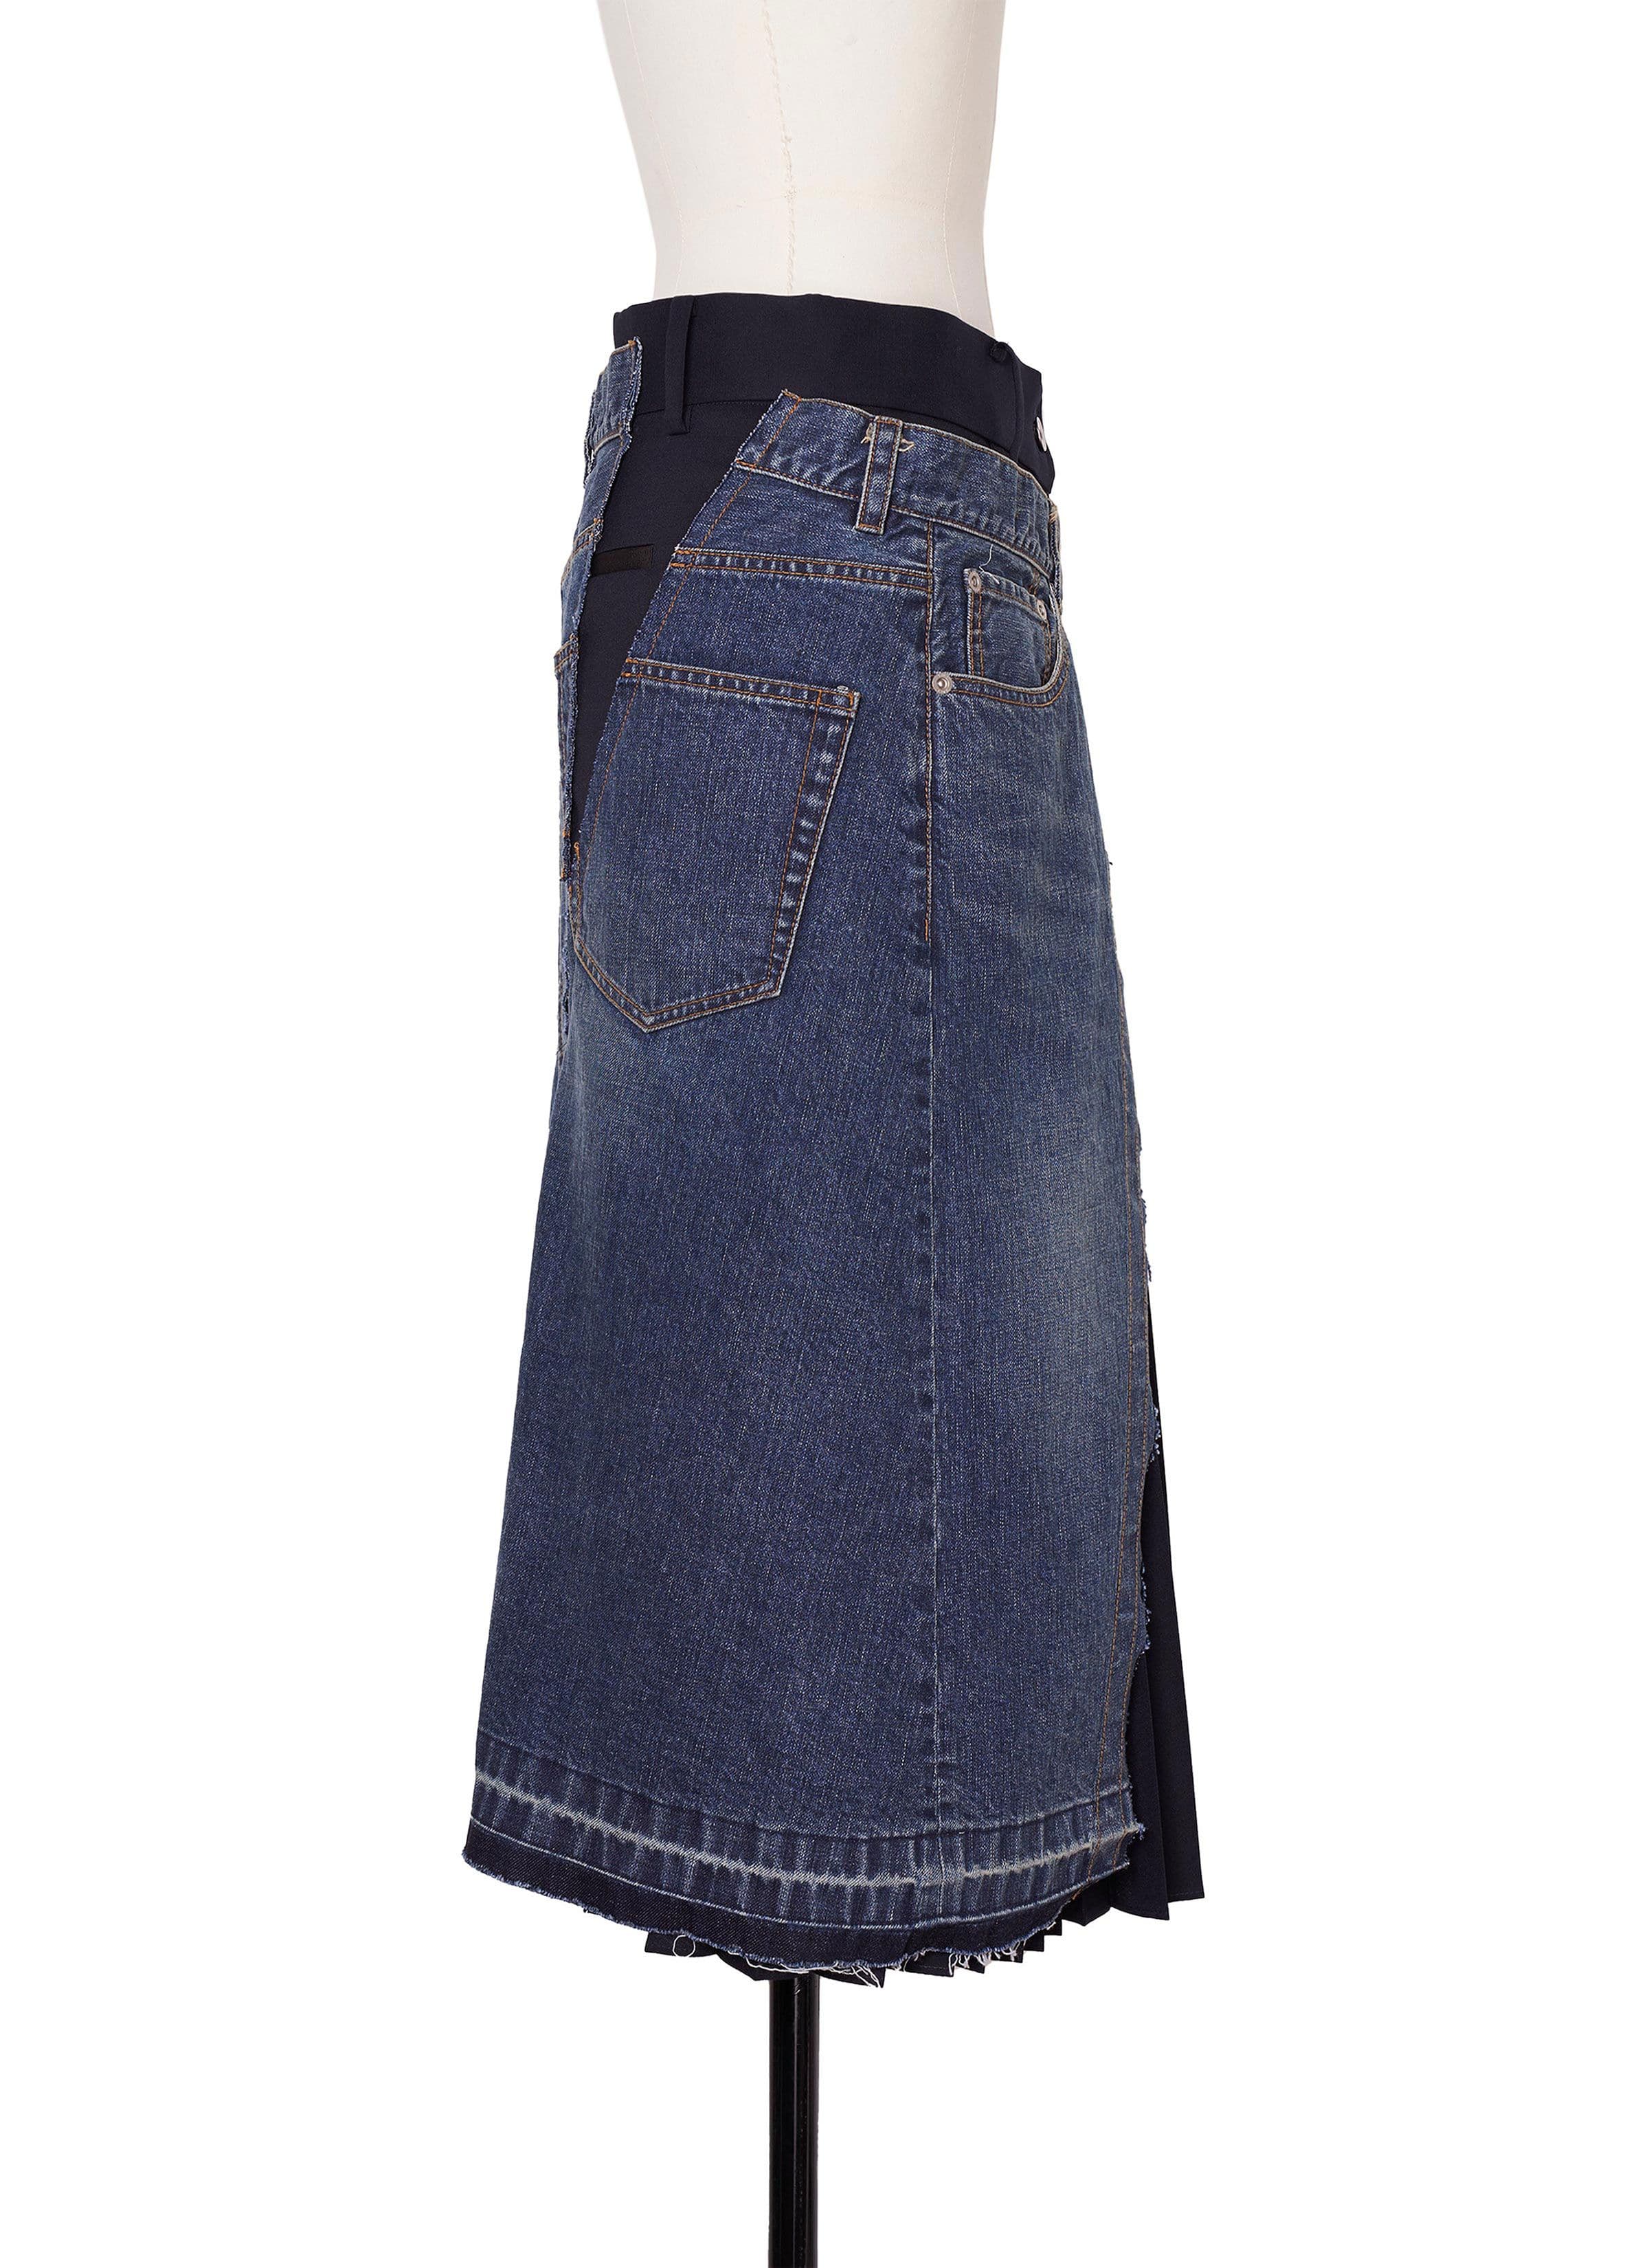 Denim x Suiting Skirt 詳細画像 BLUE 3